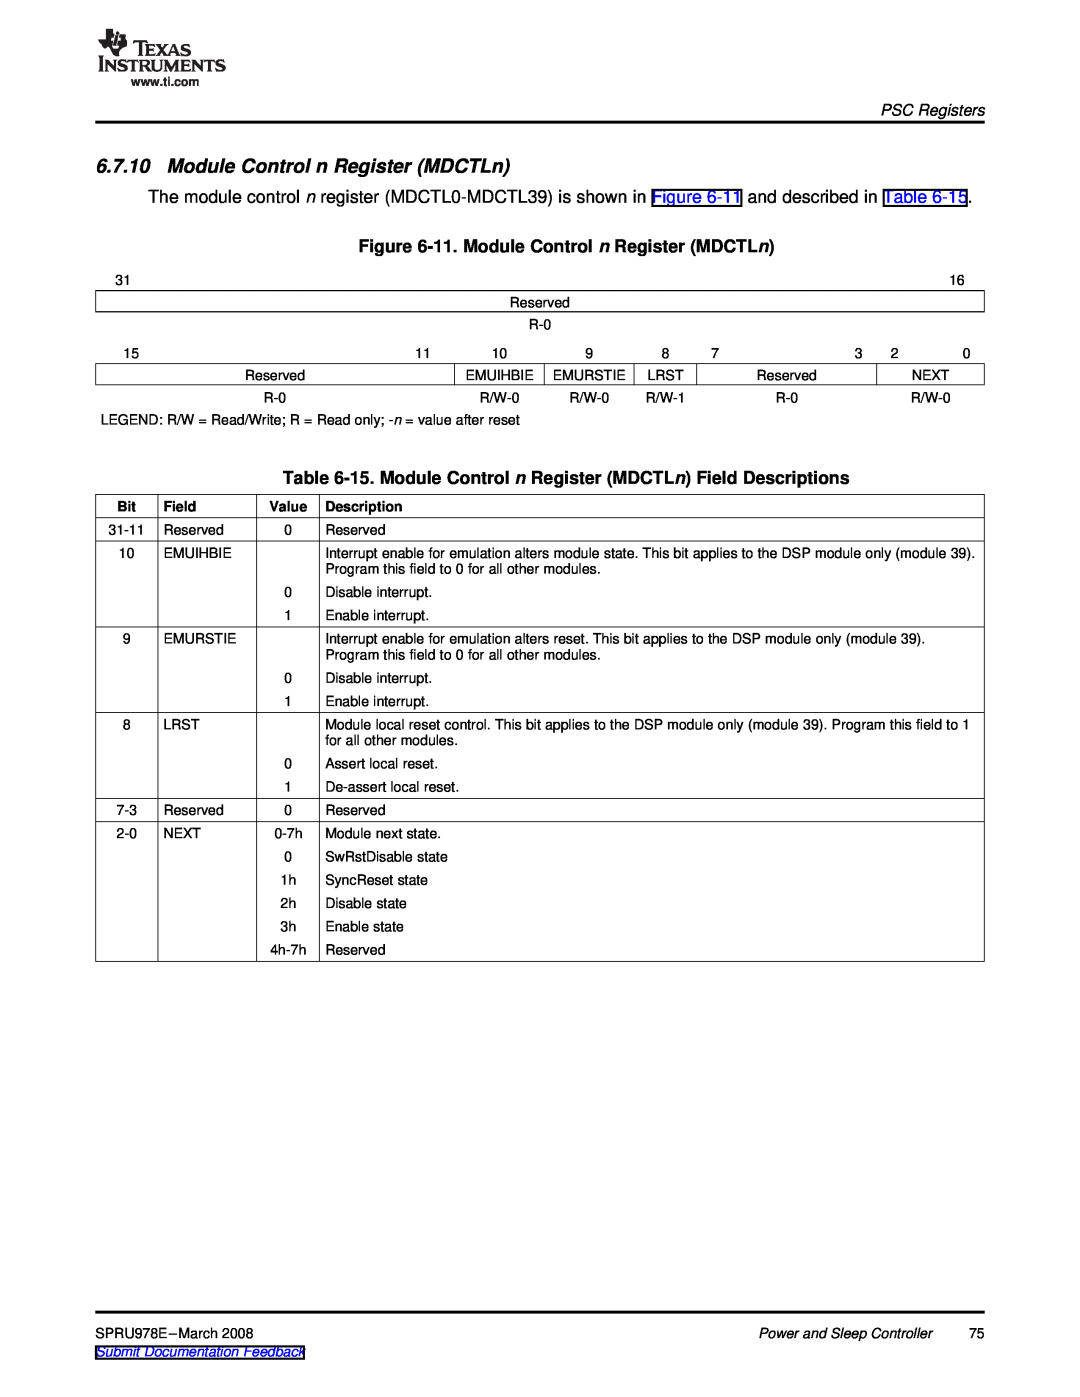 Texas Instruments TMS320DM643x manual 11. Module Control n Register MDCTLn, PSC Registers, Field, Value, Description 